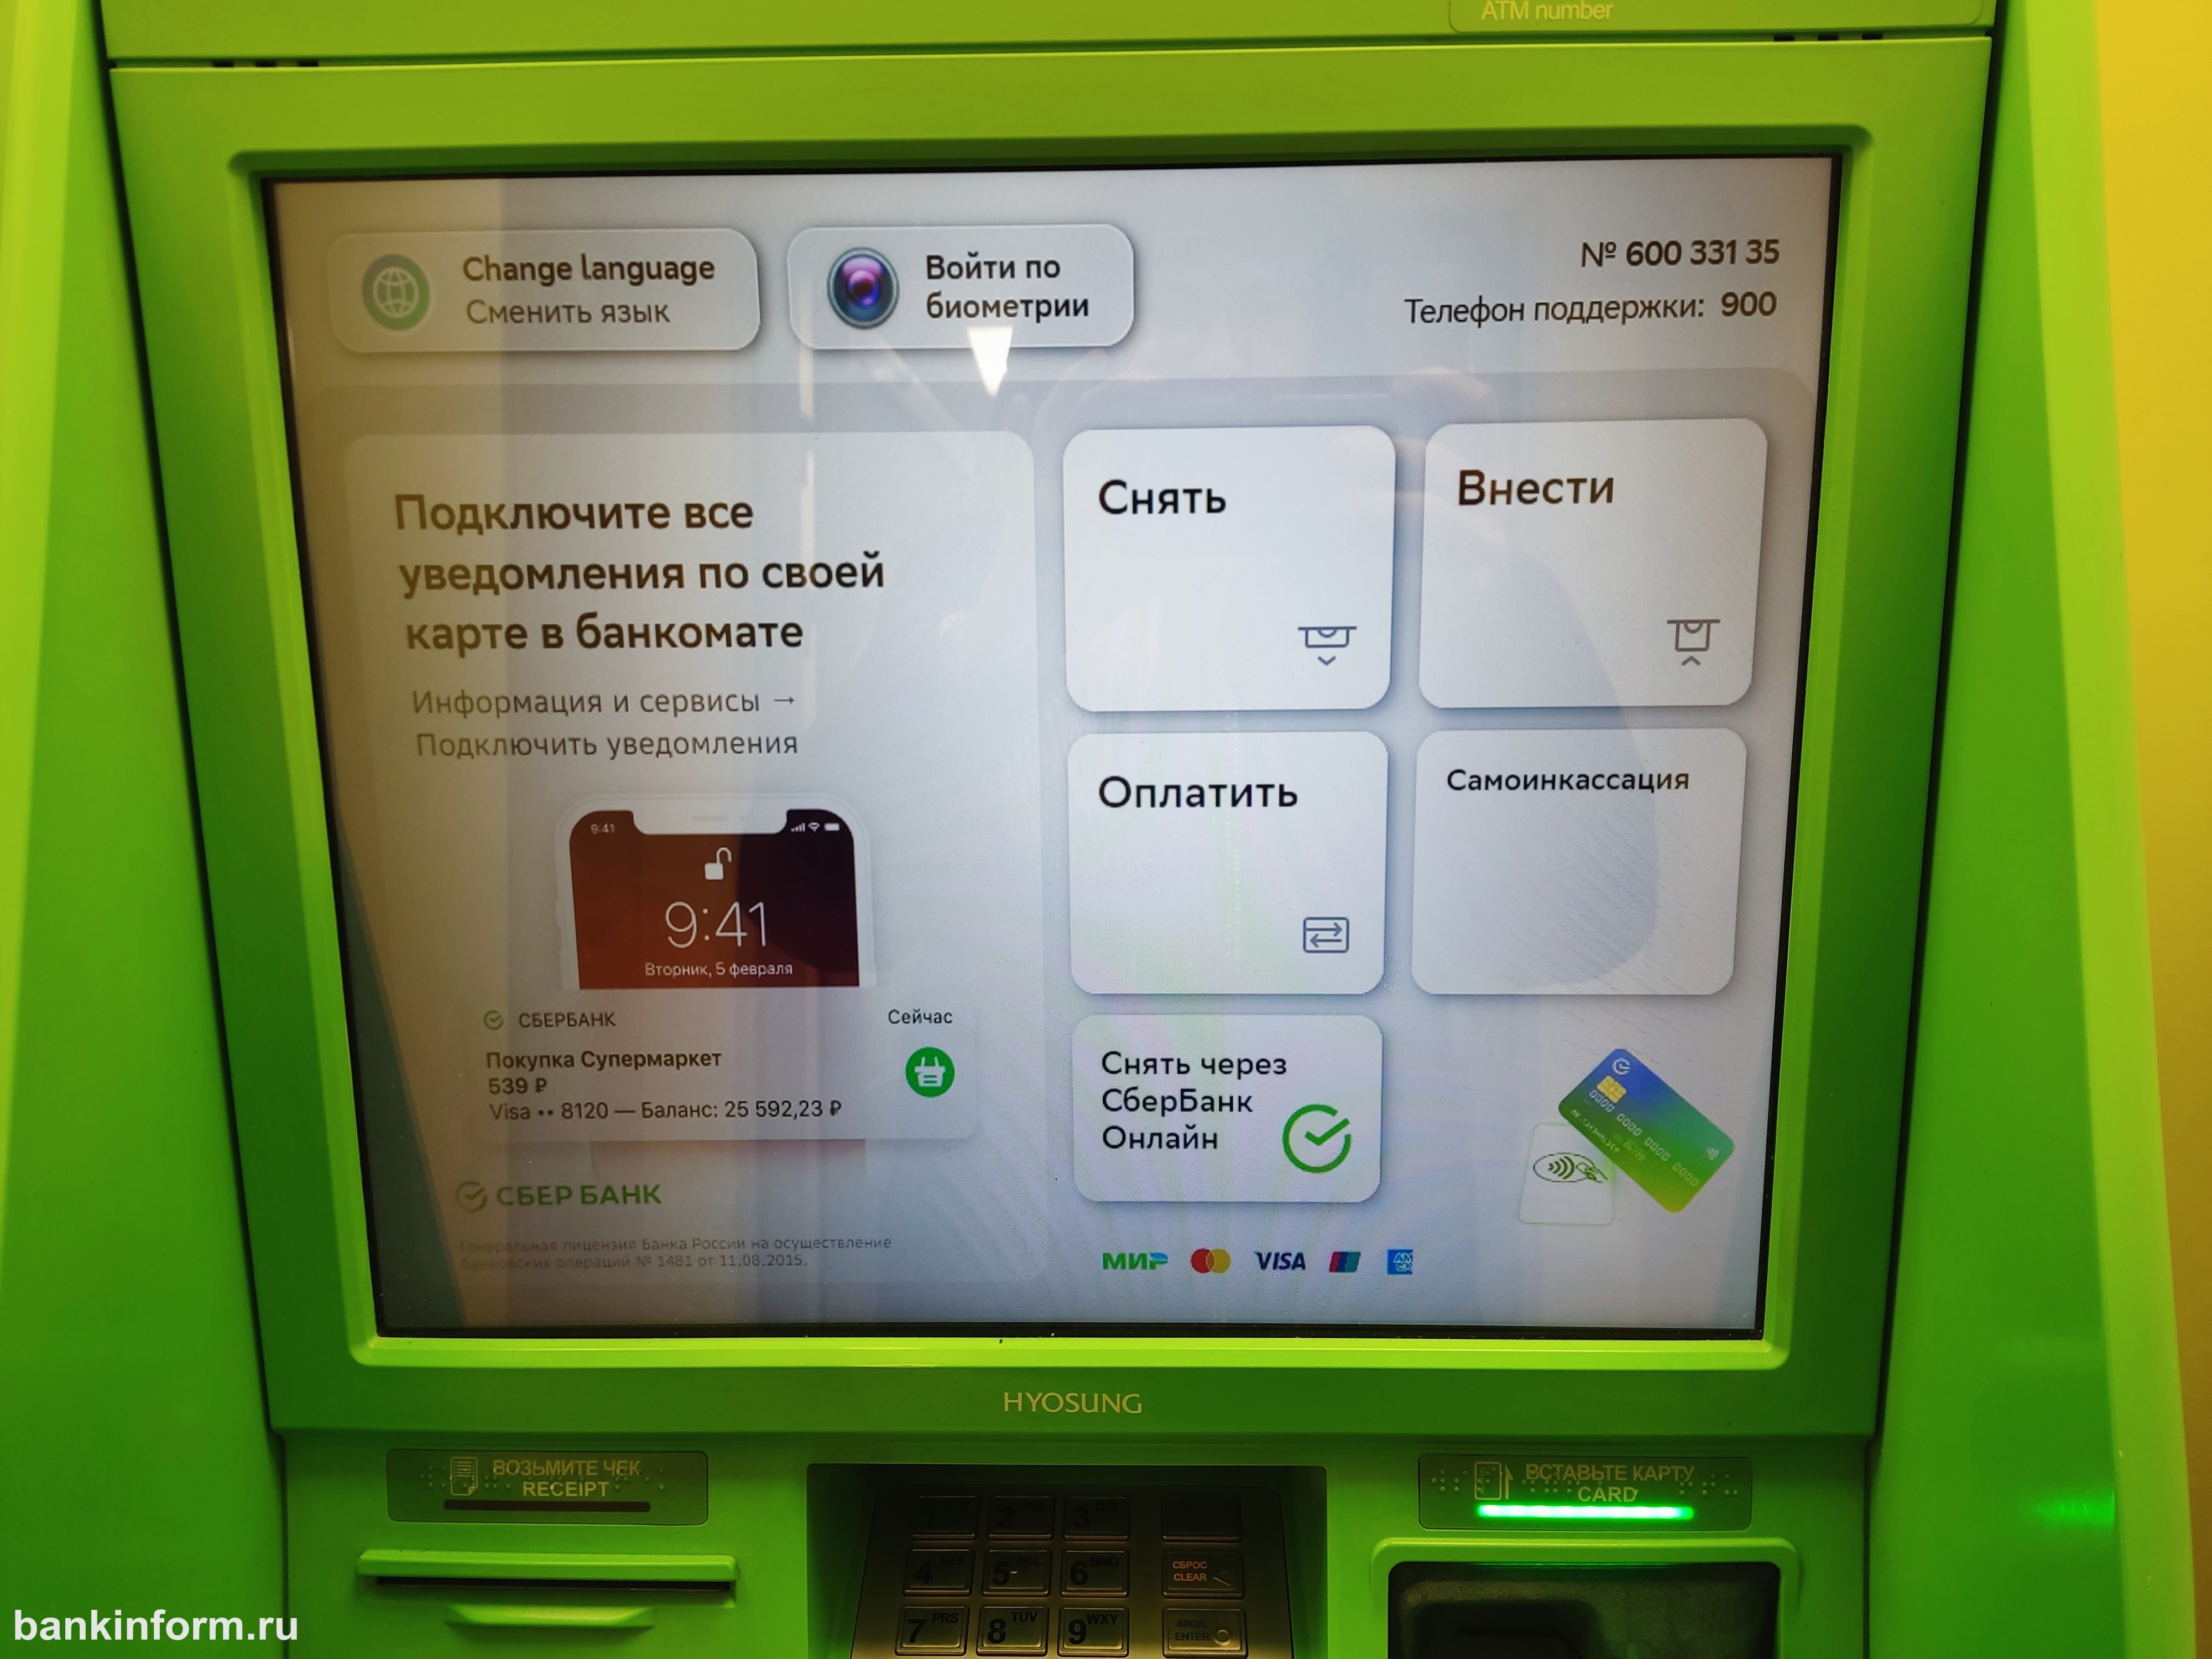 Сколько можно снять максимально с банкомата сбербанка. Экран банкомата. Деньги в банкомате. Экран банкомата Сбербанка. Клавиатура банкомата.